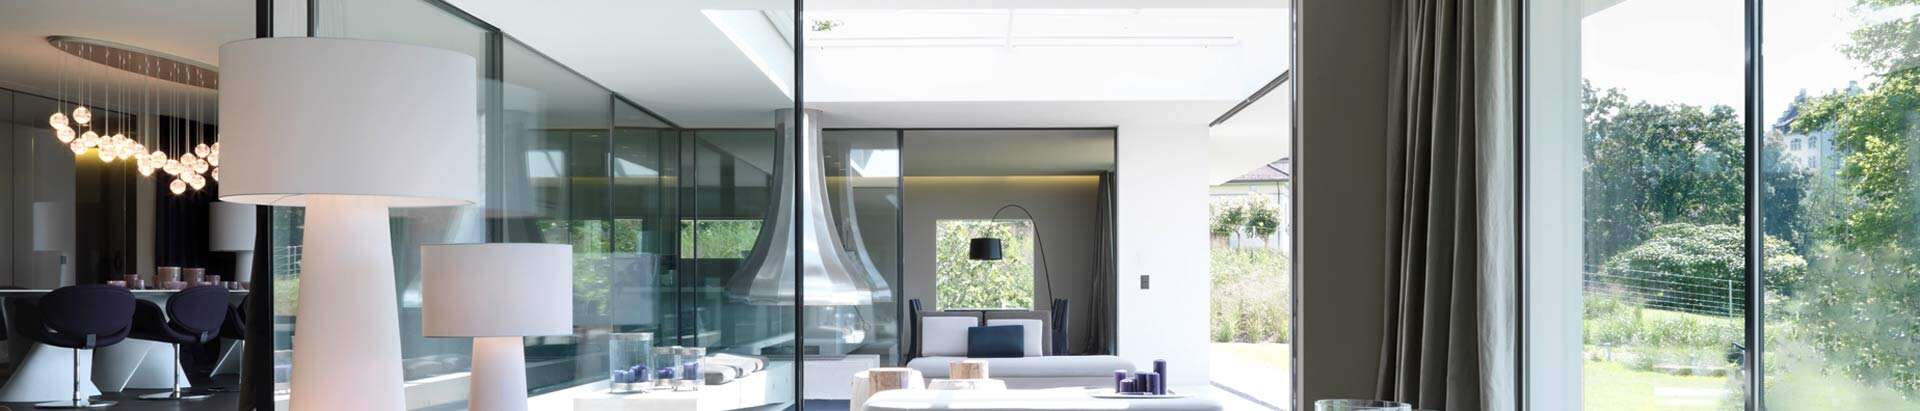 Living room with horizontal sliding windows